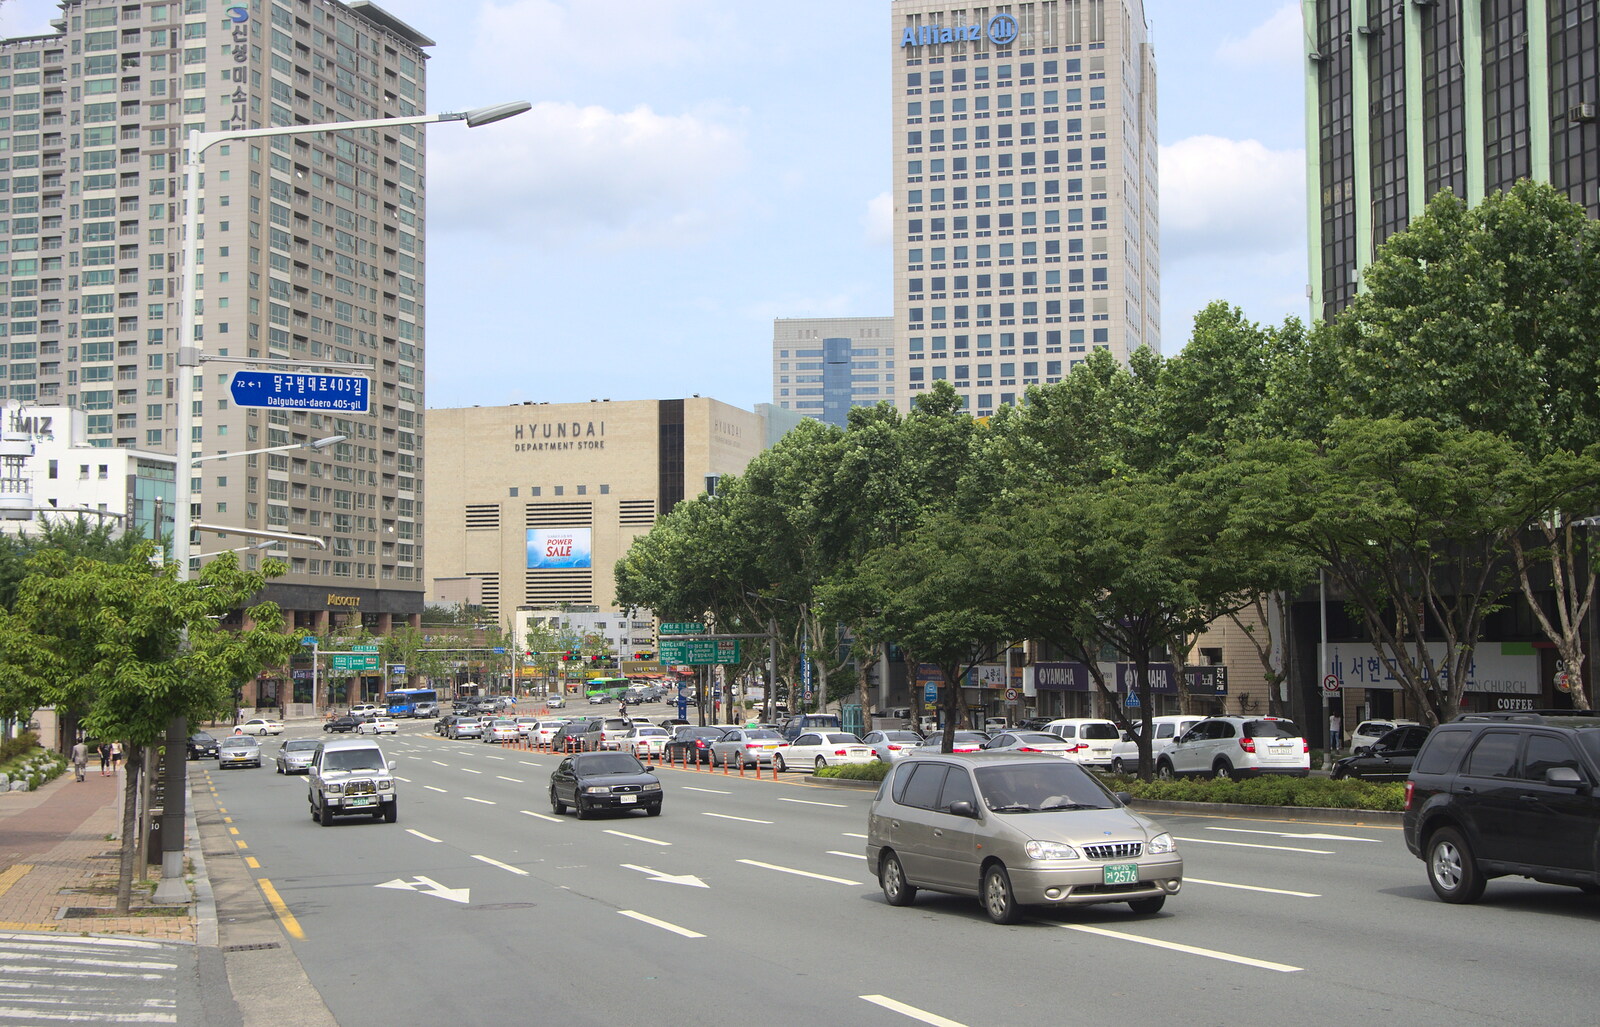 Daegu expressway and the Hyundai department store from Seomun Market, Daegu, South Korea - 1st July 2012